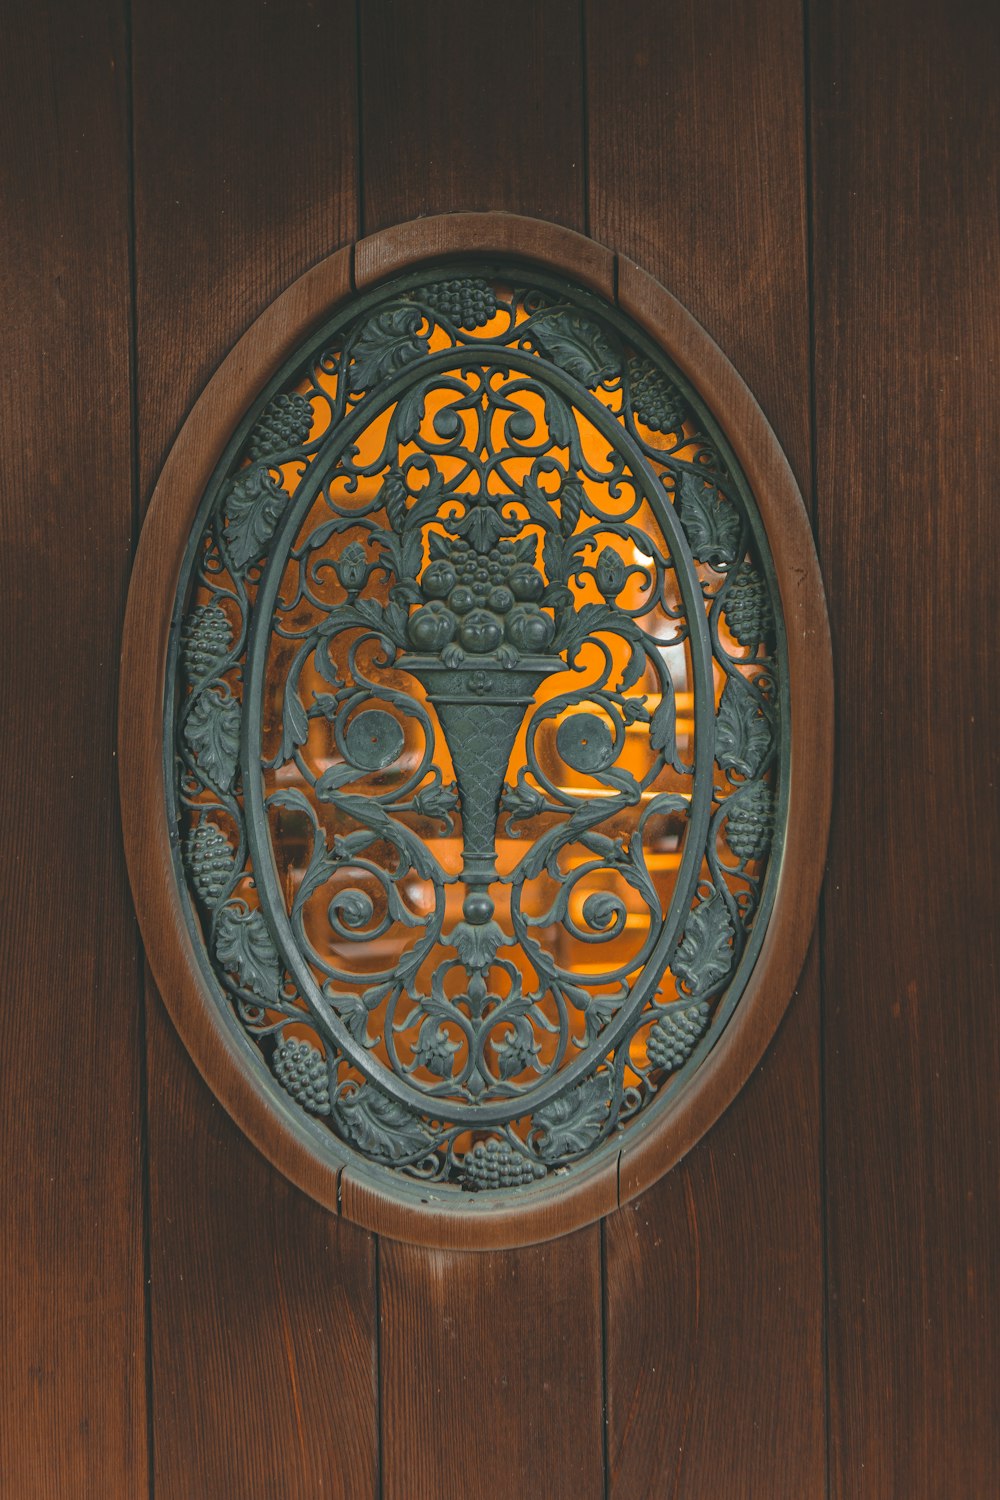 a wooden door with a decorative metal design